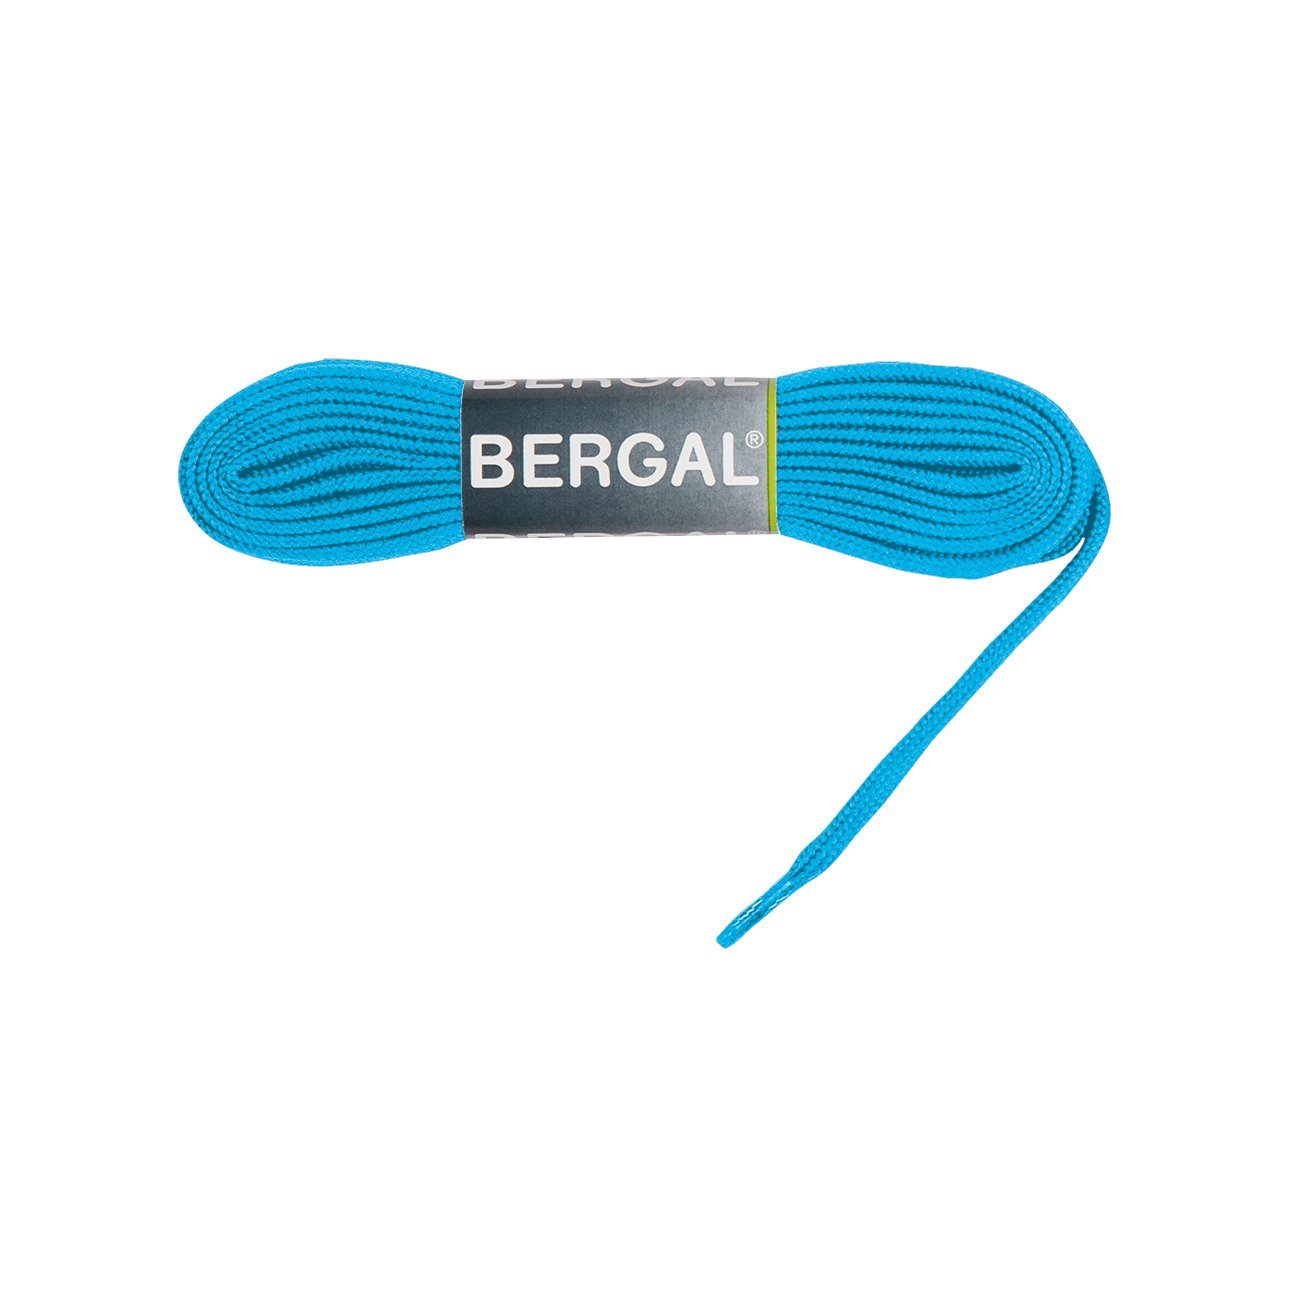 Bergal Schnürsenkel Sneaker Laces - Flach - 10 mm Breit Türkis